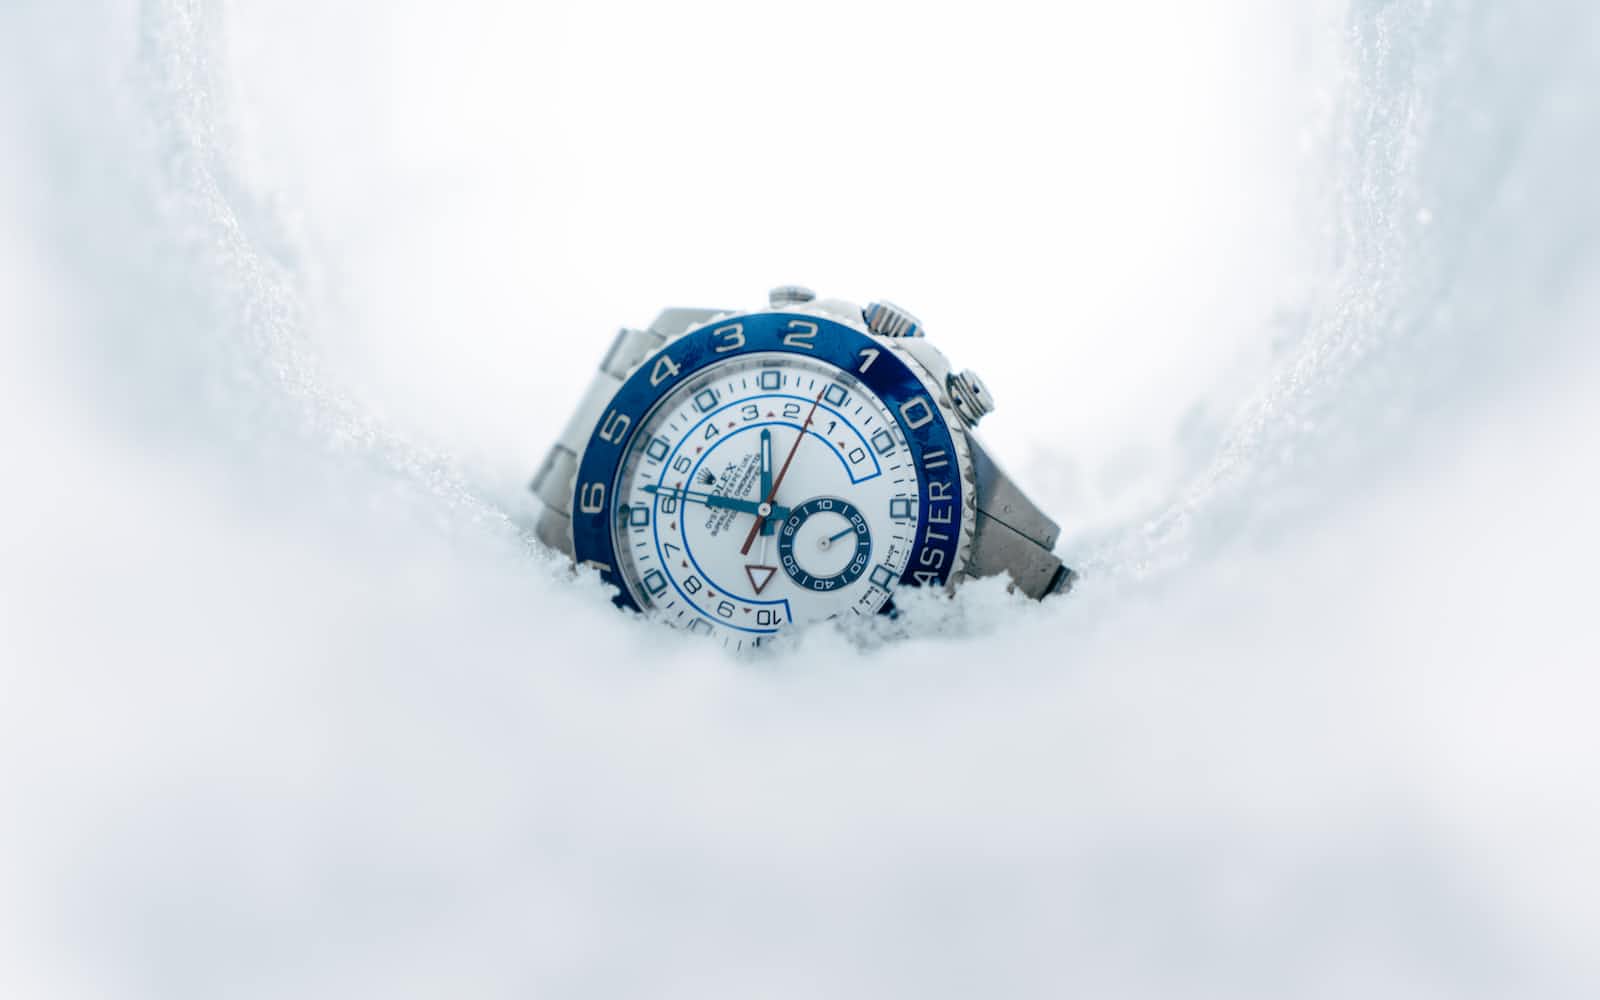 A Rolex watch sitting on snow